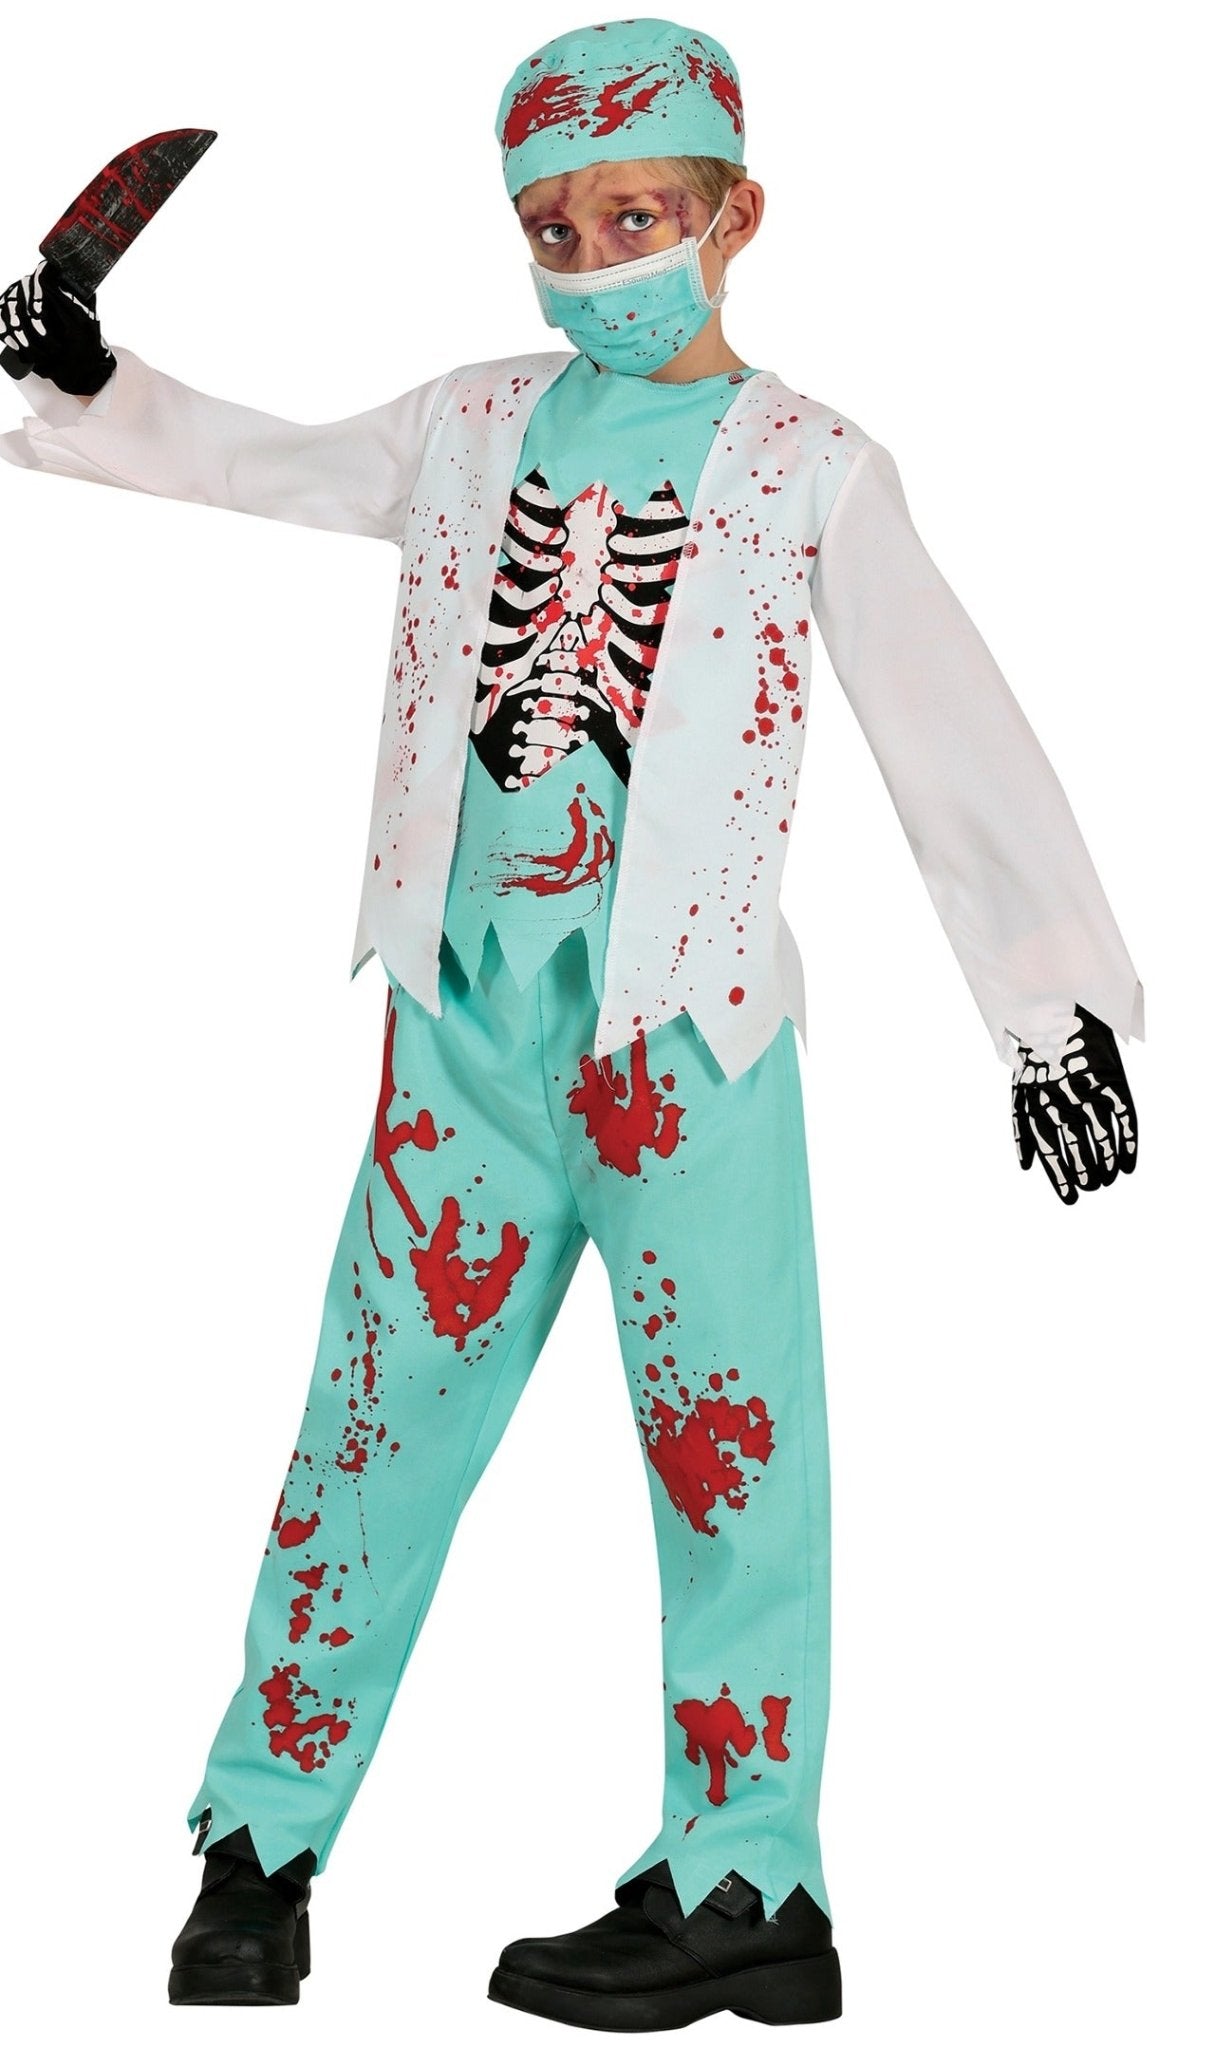 Acquista online costume da Dottor Zombie infantile